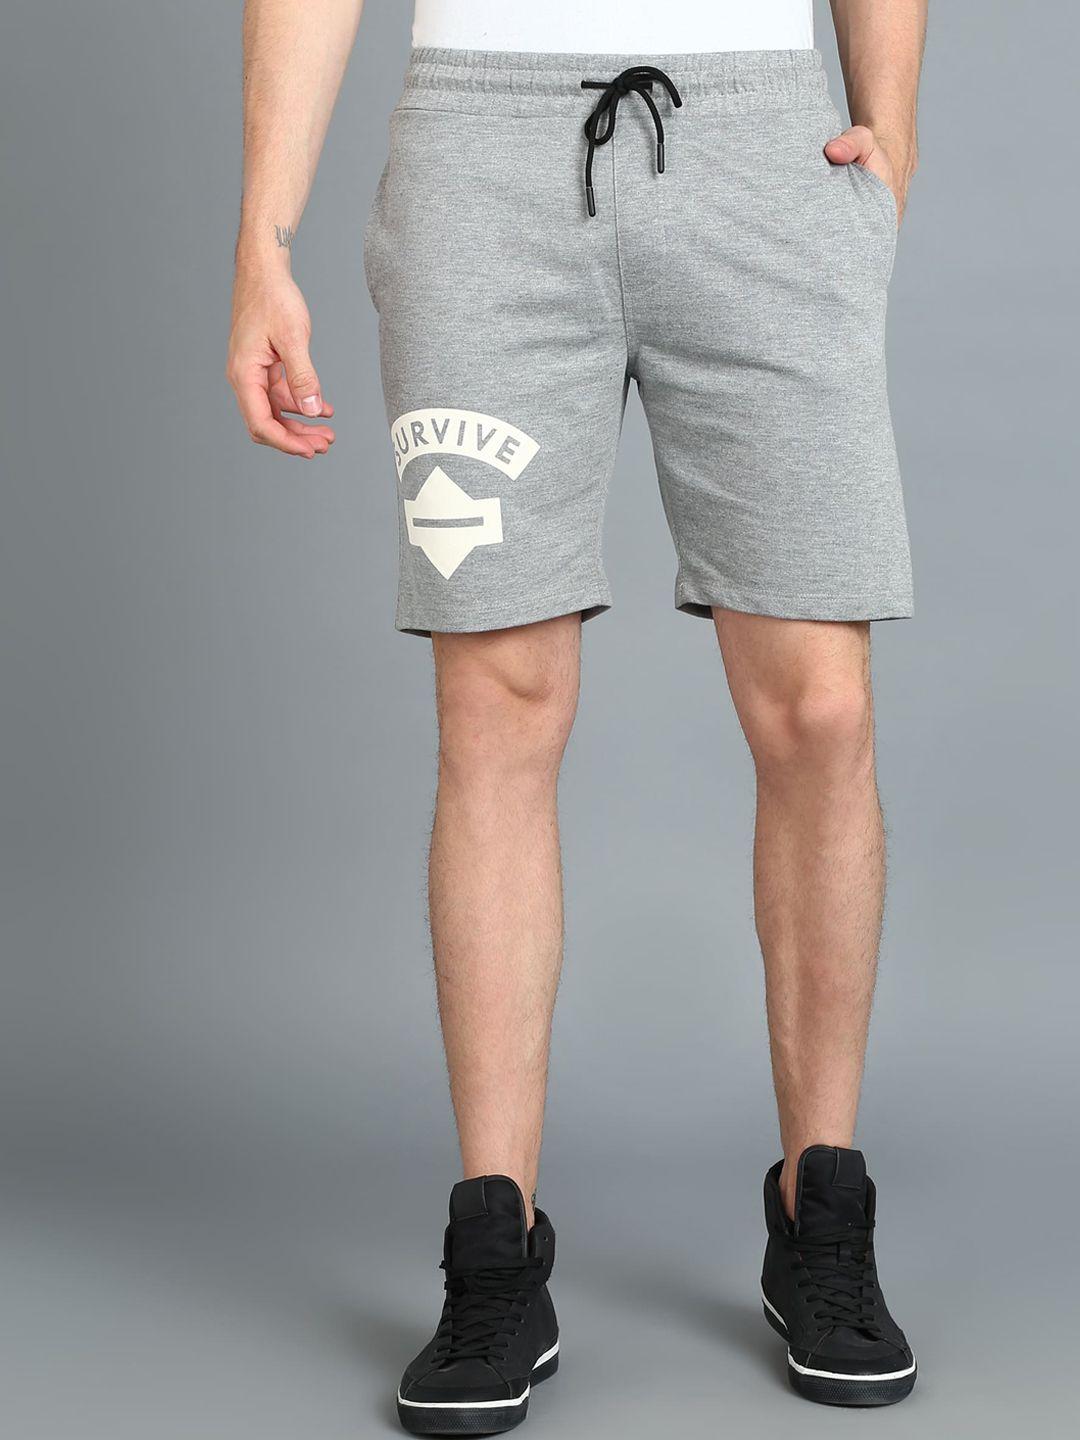 urbano fashion men mid rise slim fit cotton shorts